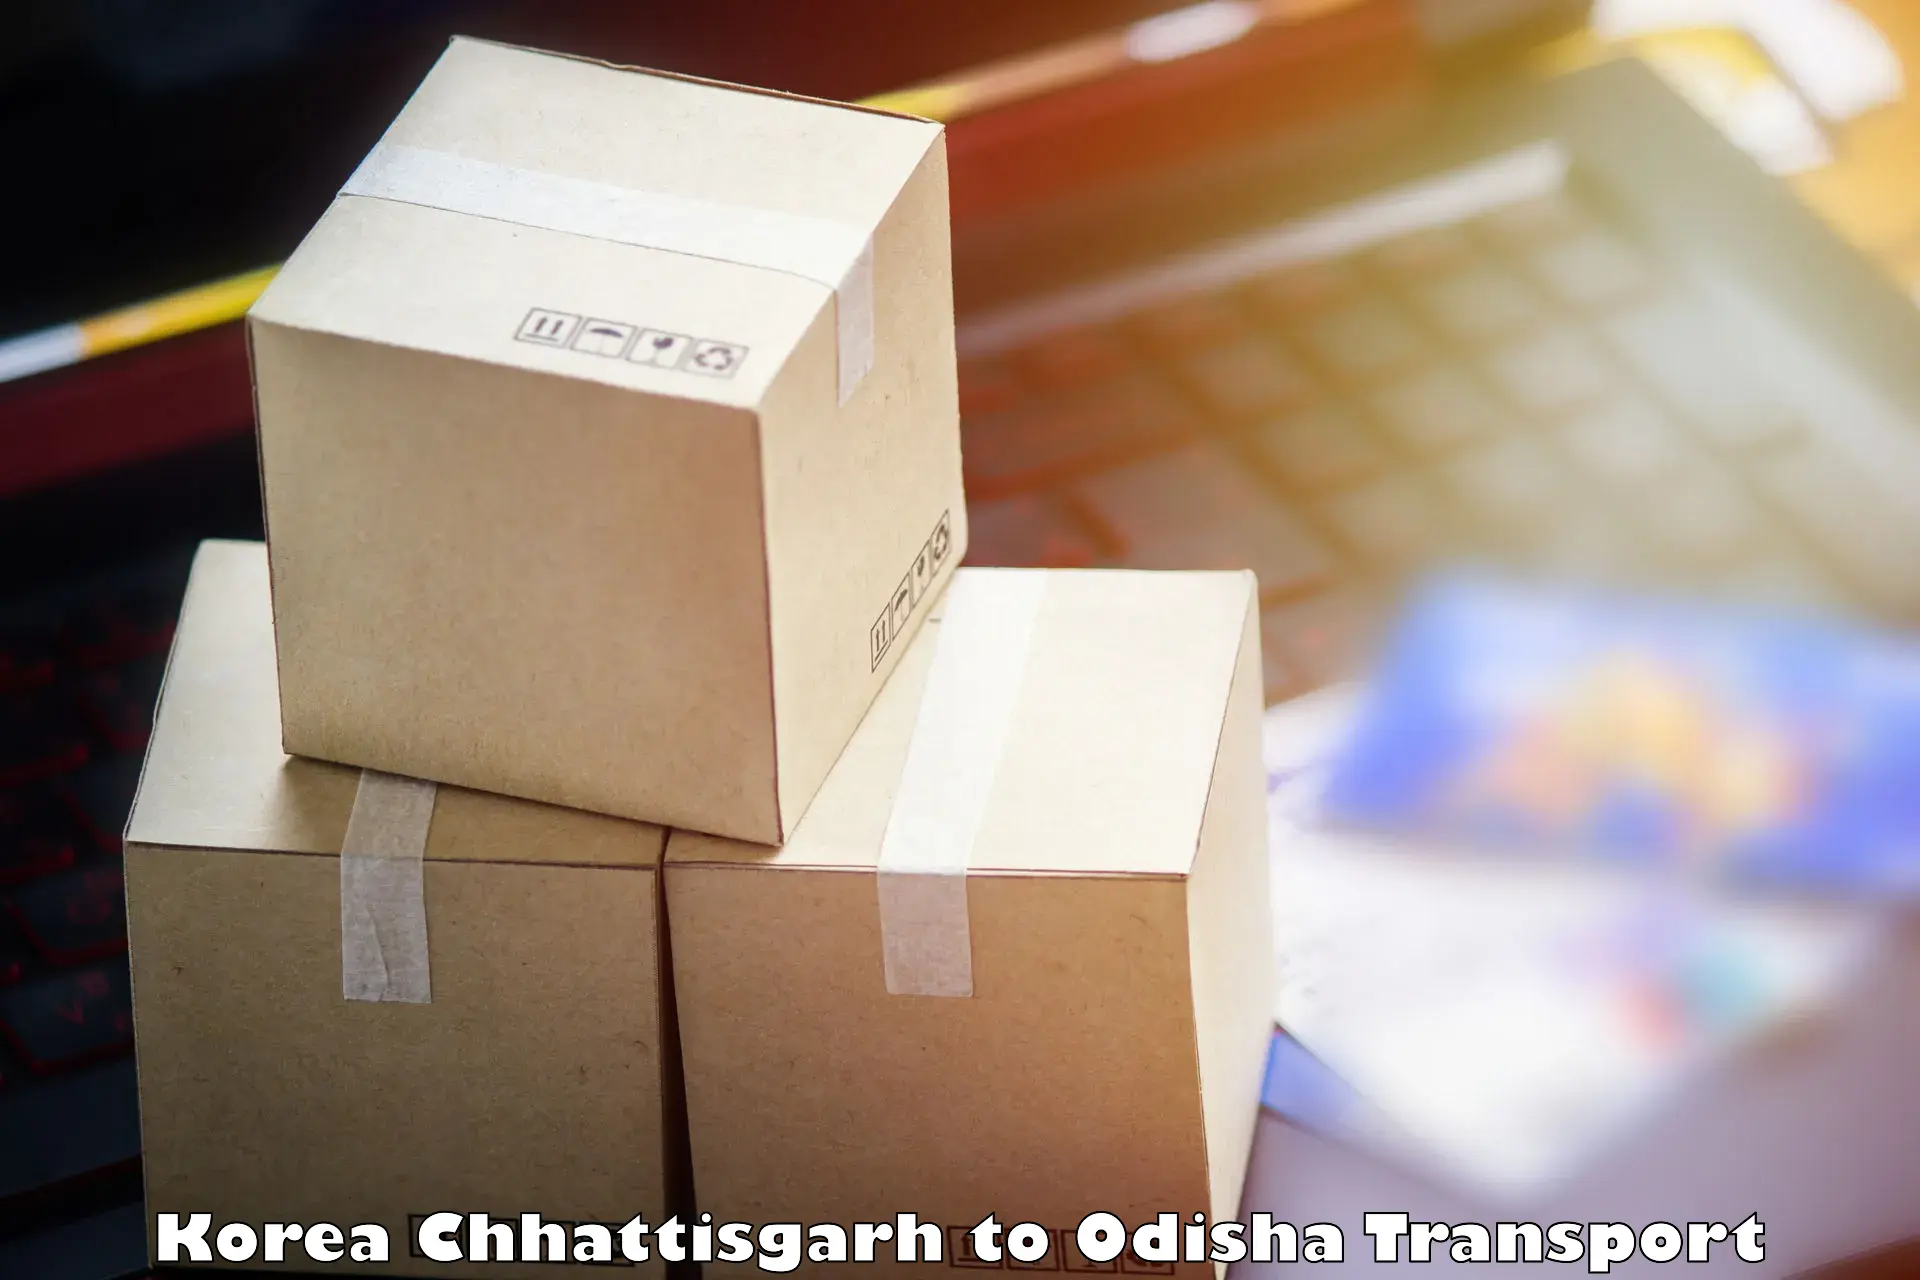 Goods delivery service Korea Chhattisgarh to Rourkela